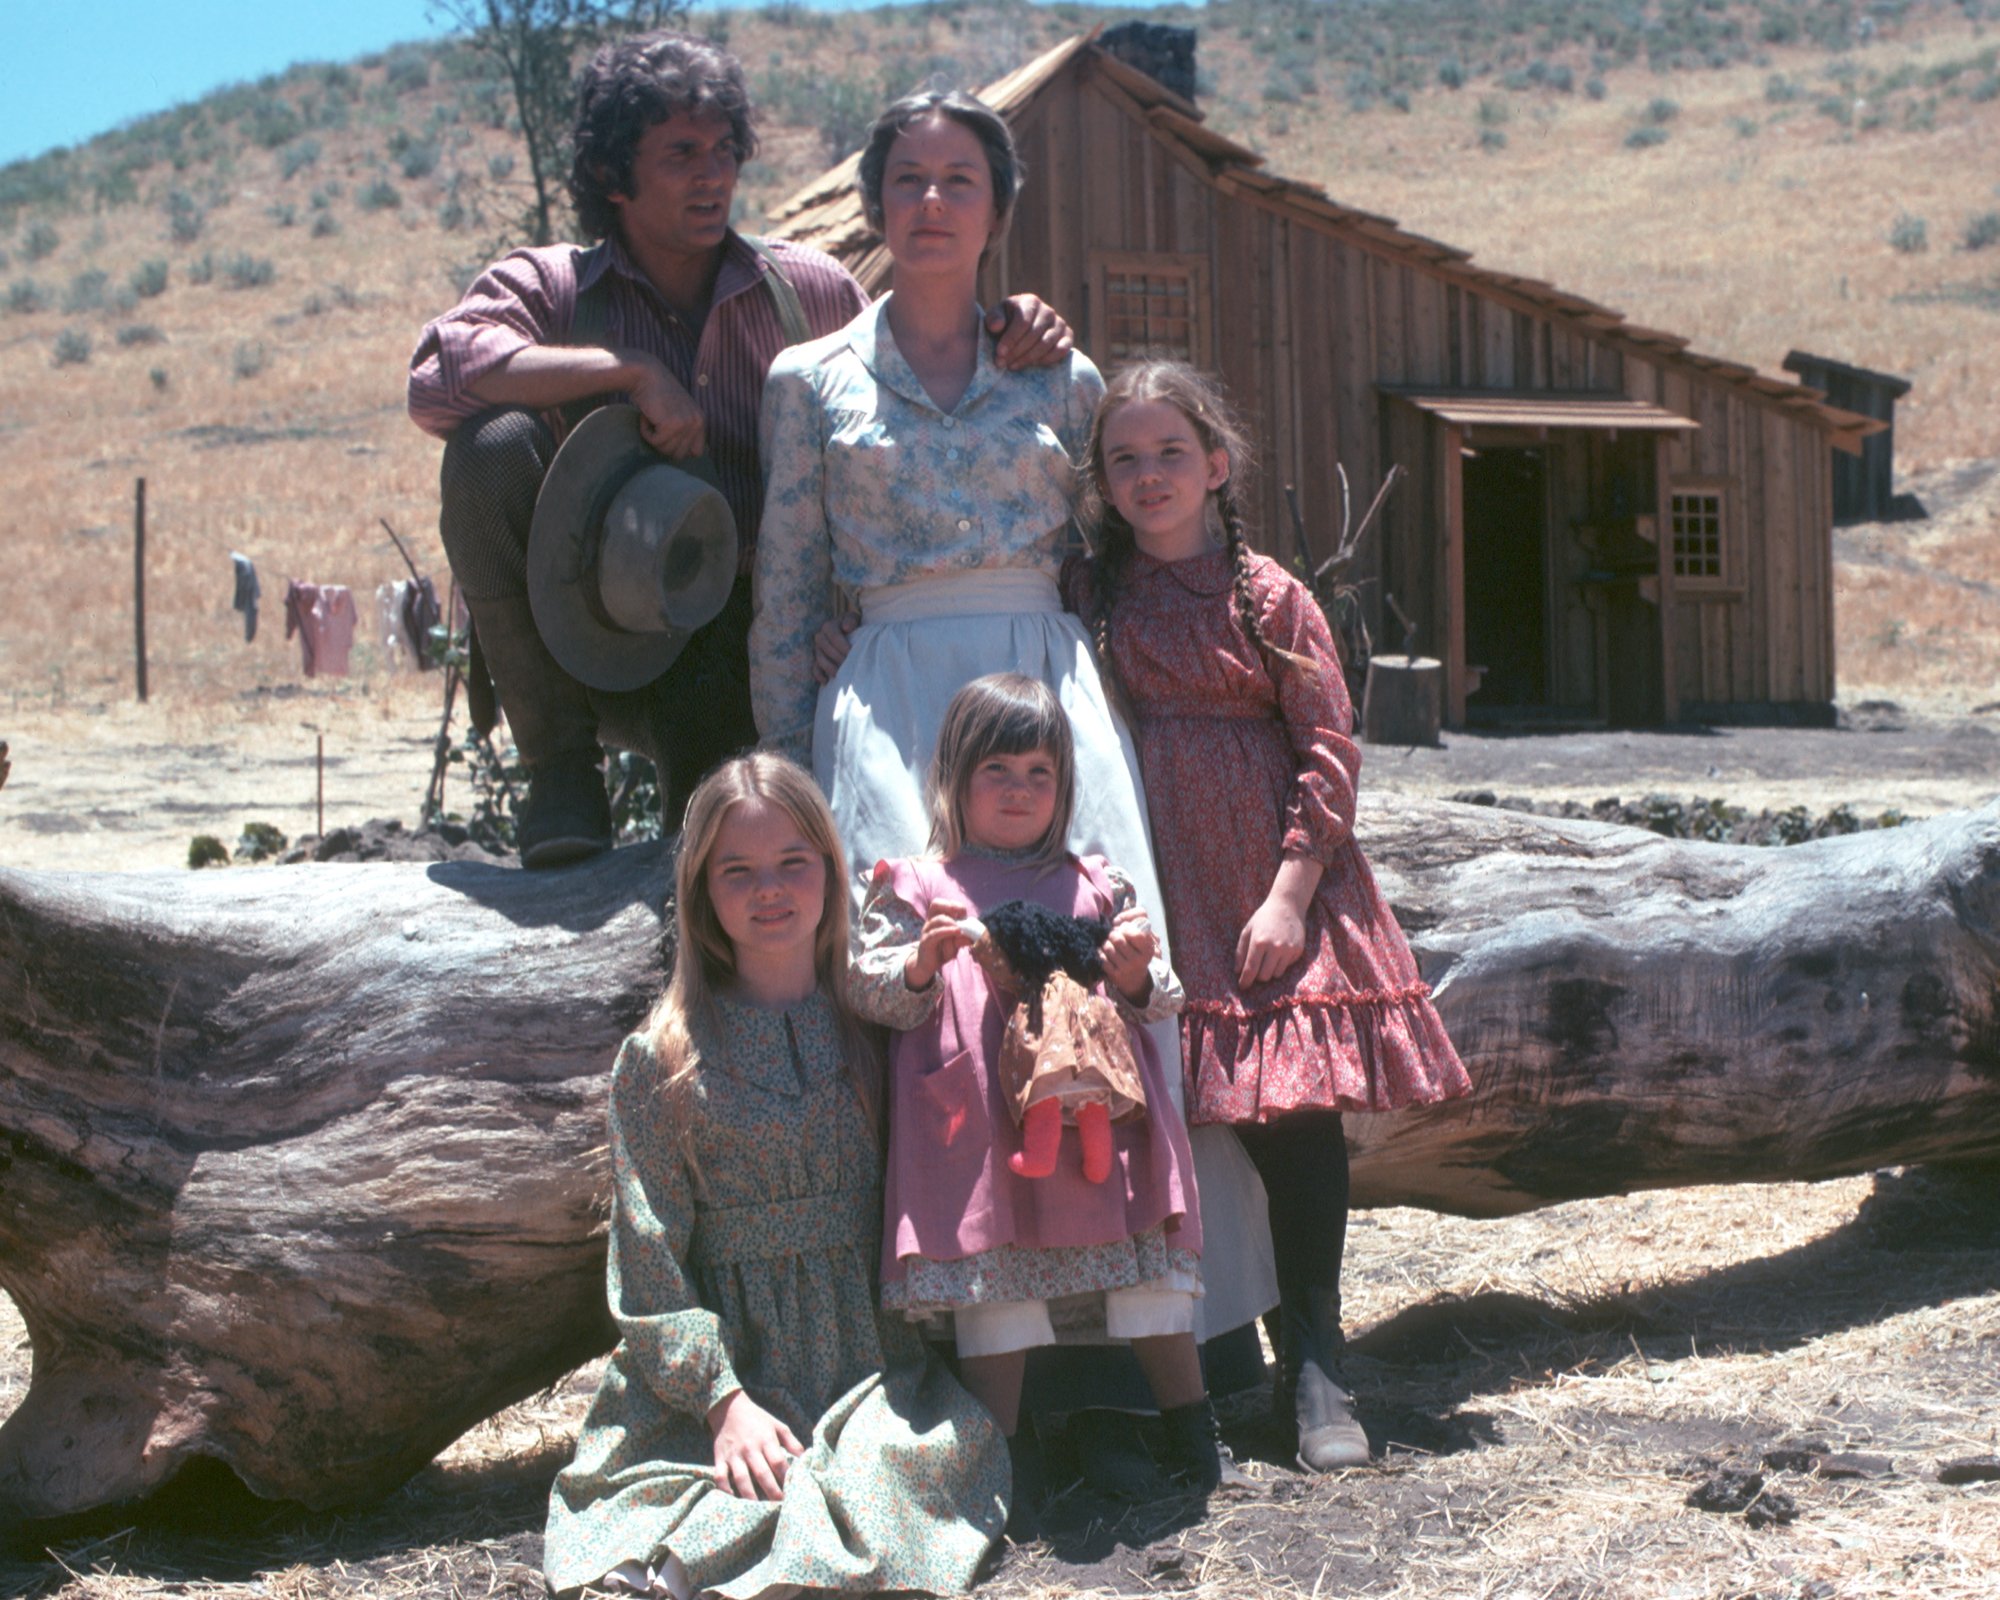 Little House on the Prairie cast poses on a log